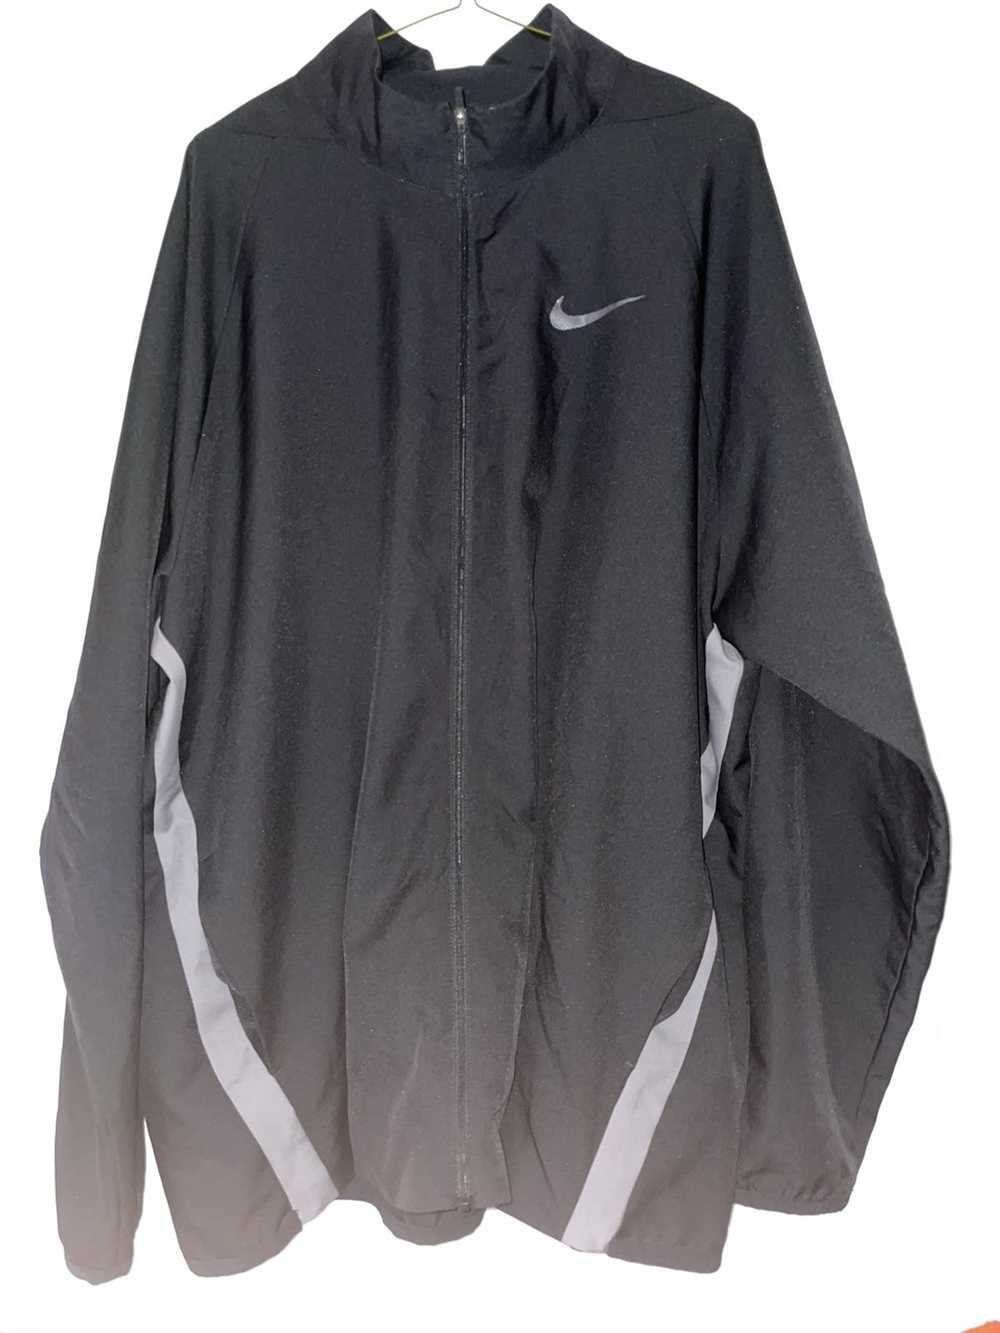 Nike Nike Dri Fit Track Jacket - image 4